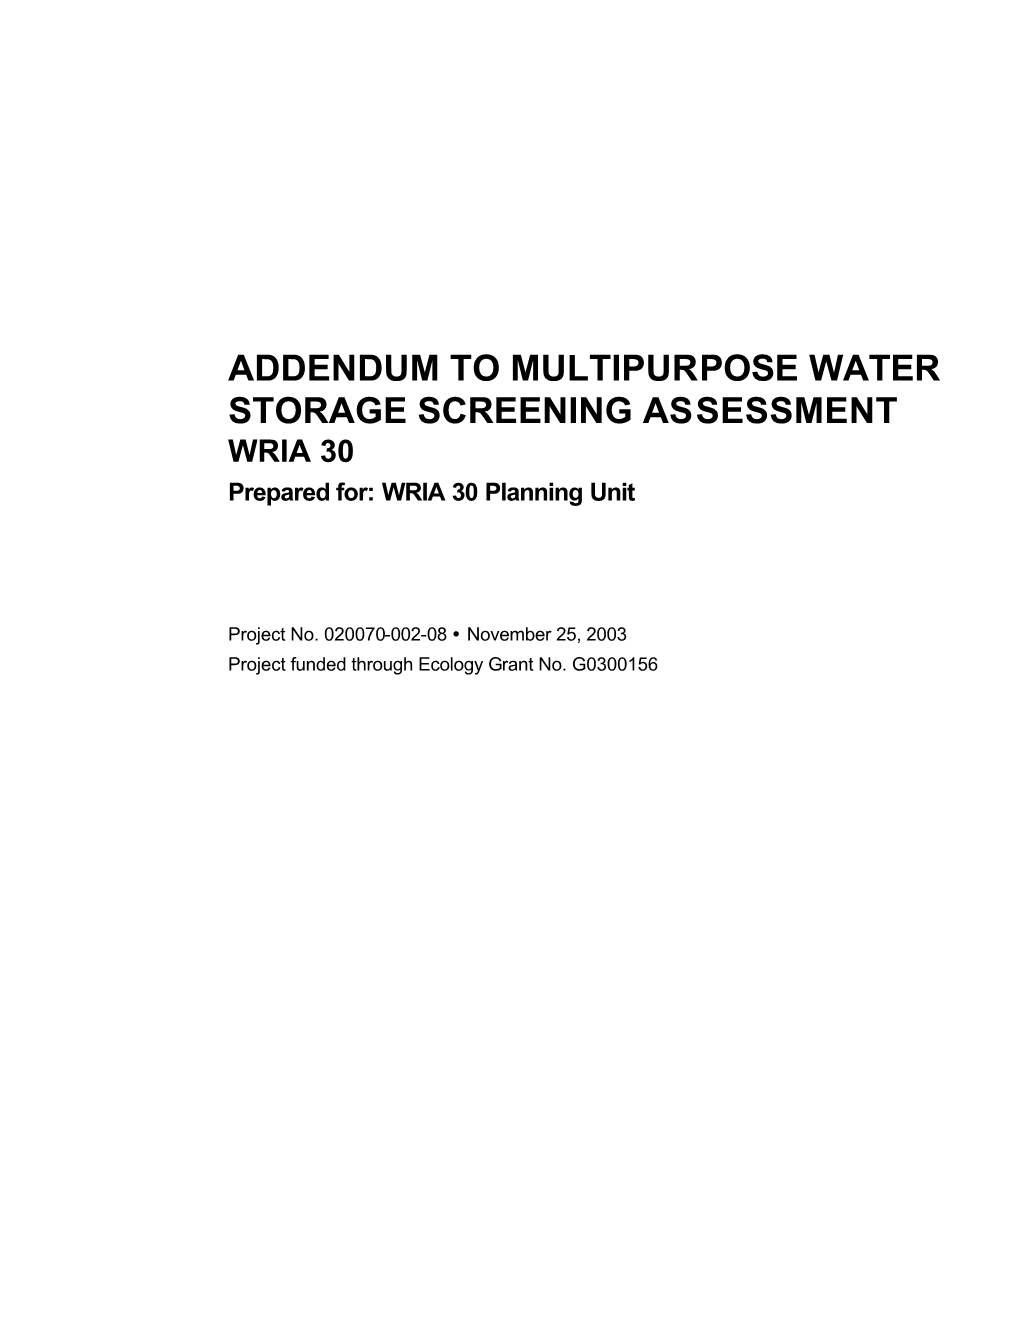 ADDENDUM to MULTIPURPOSE WATER STORAGE SCREENING ASSESSMENT WRIA 30 Prepared For: WRIA 30 Planning Unit